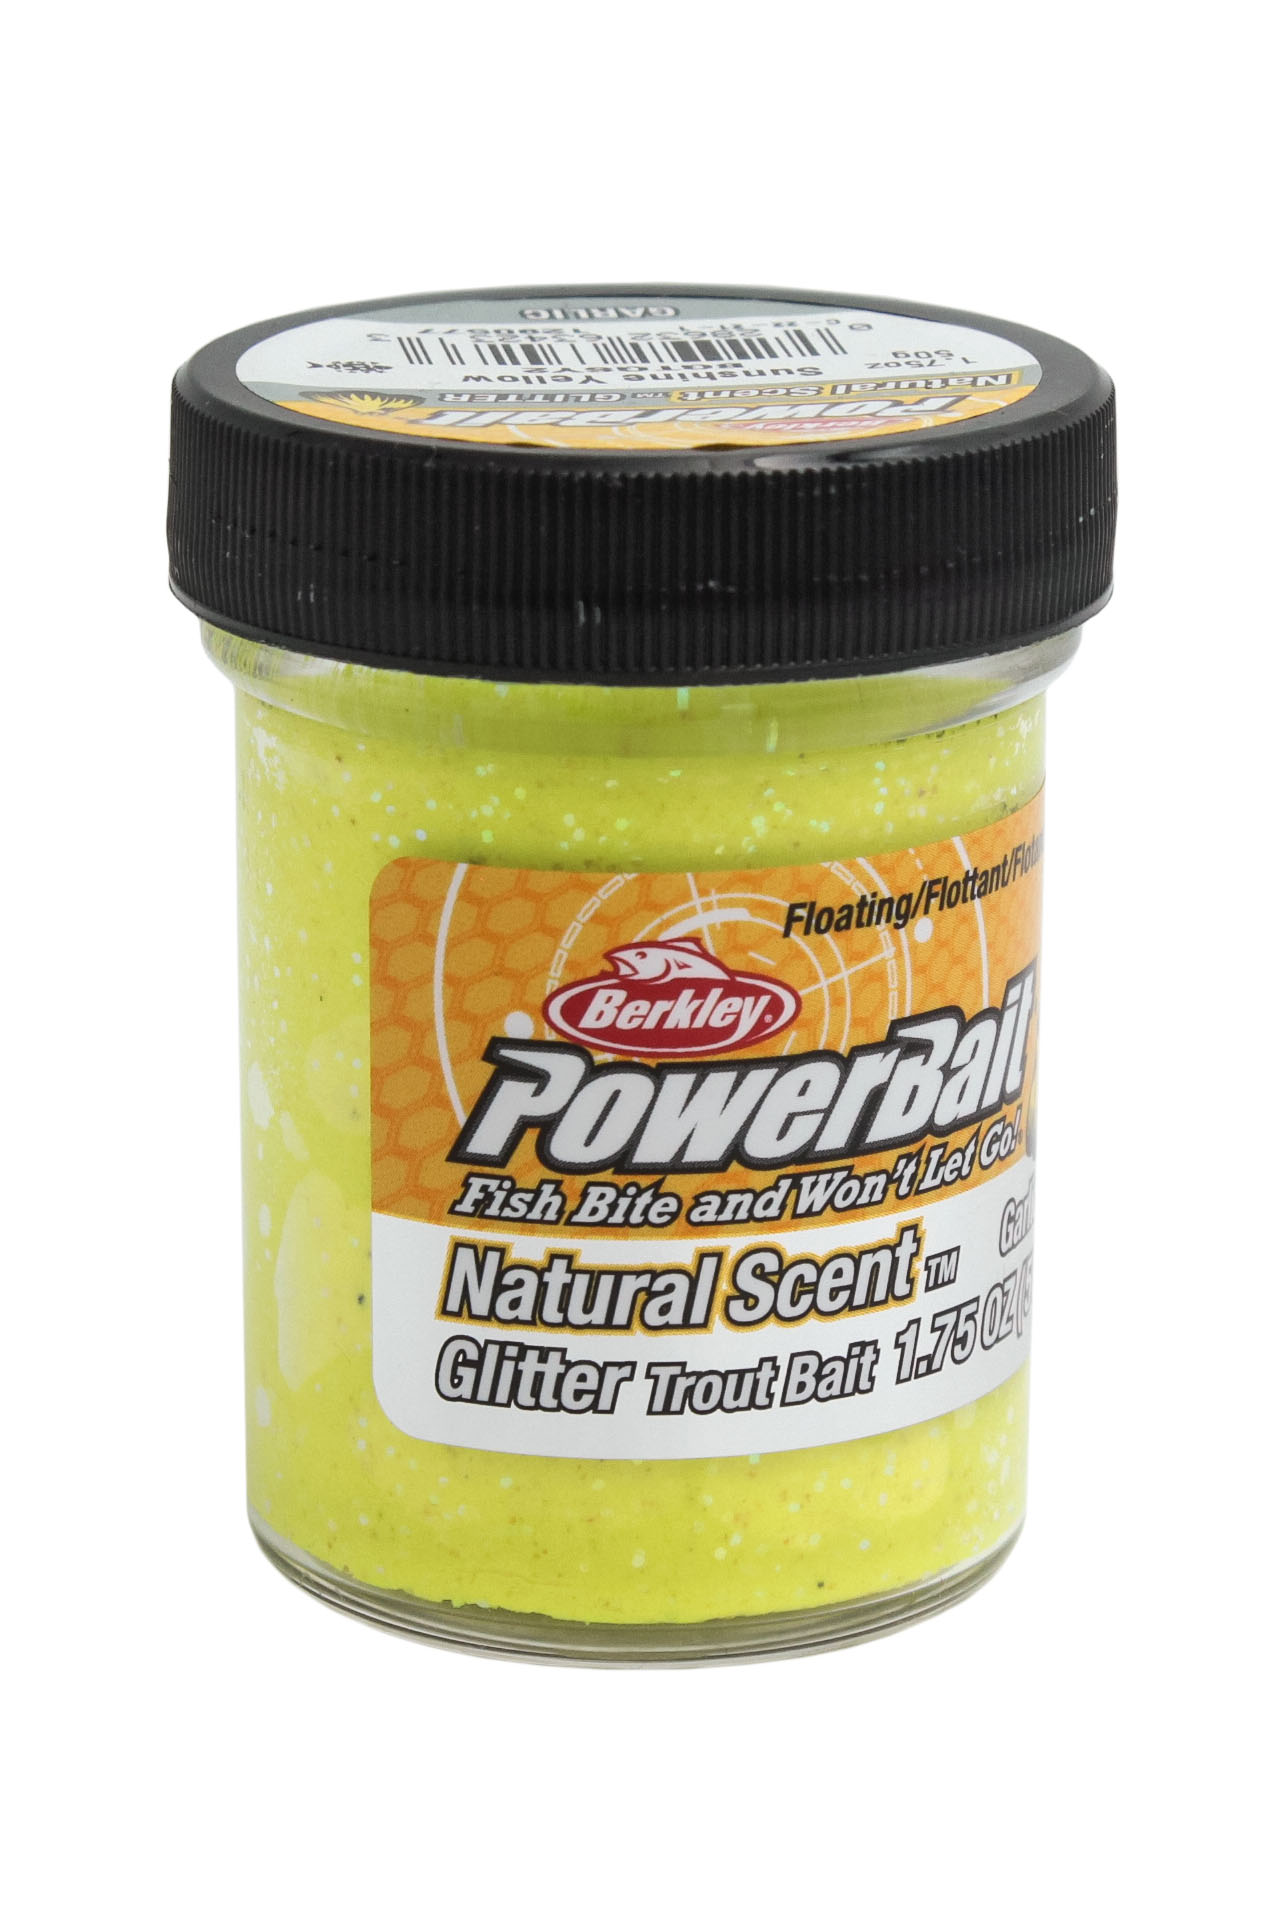 Паста Berkley Powerbait natural scent 50гр Garlic Sunshine Yellow - фото 1